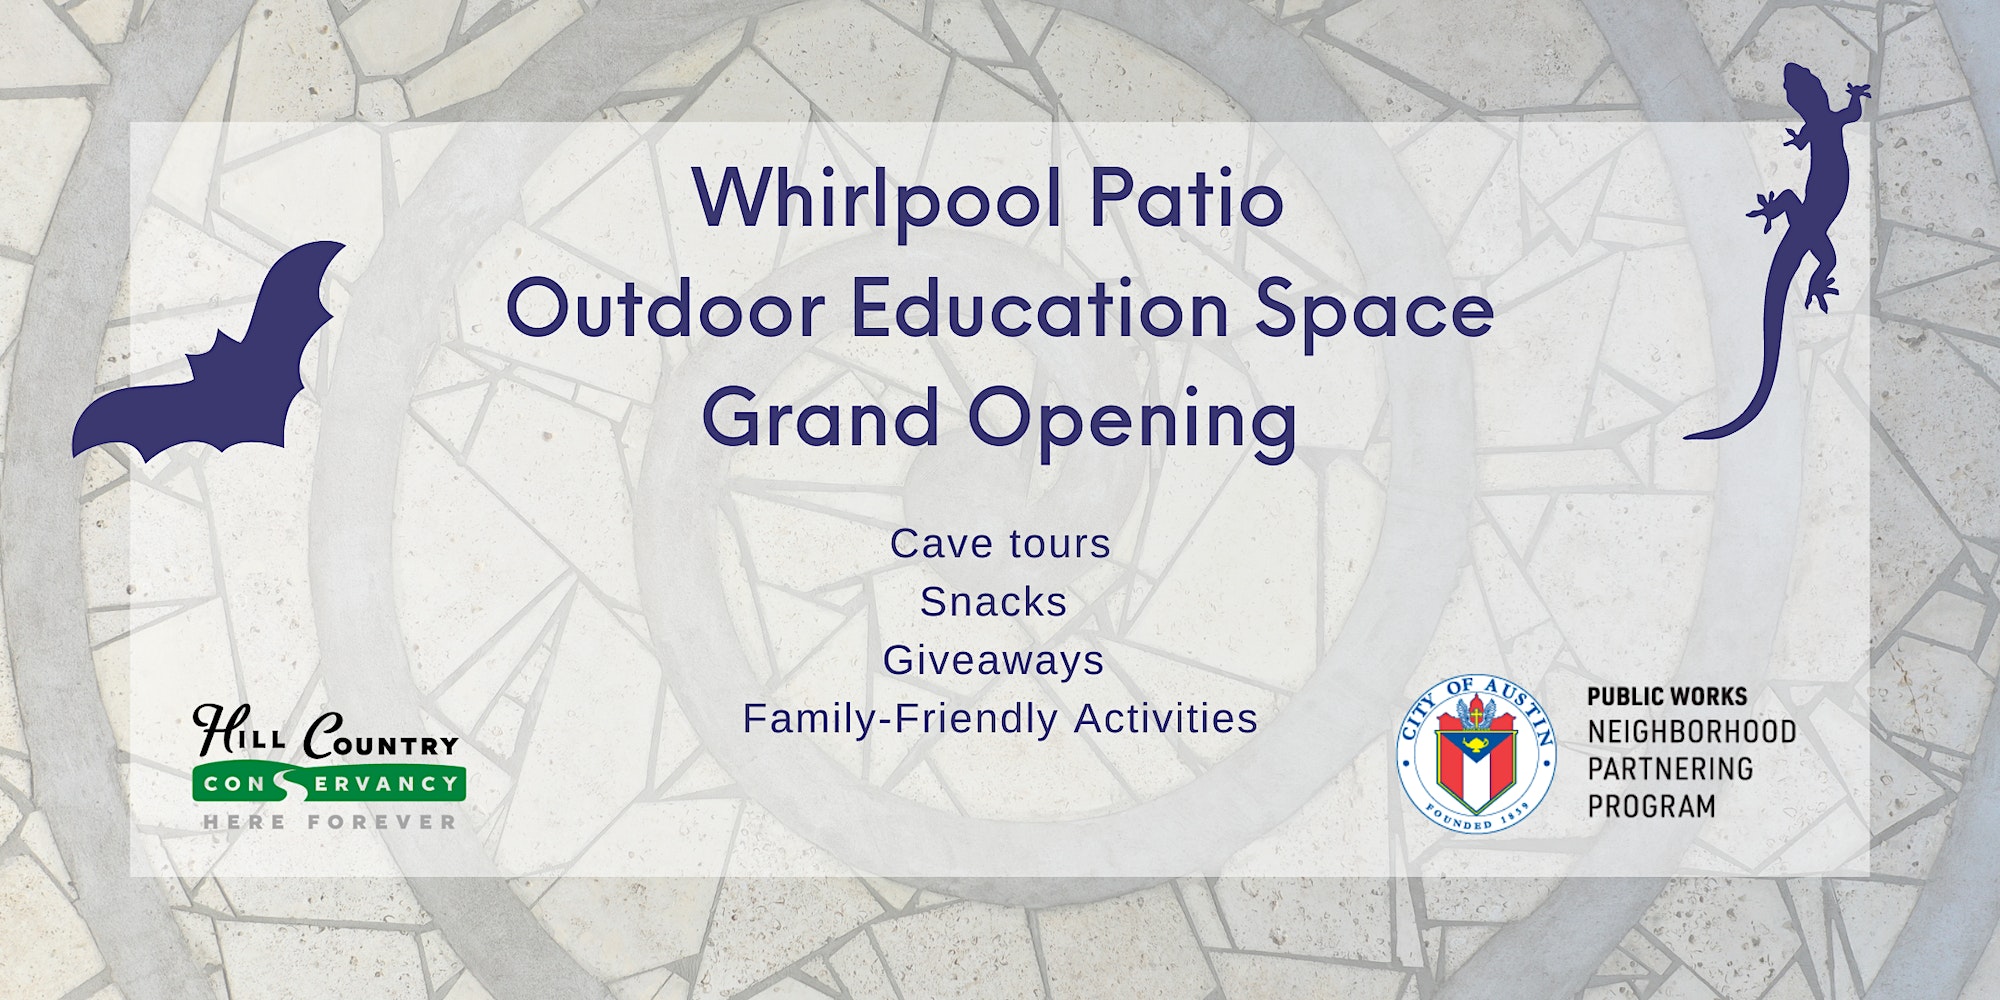 Whirlpool Patio Grand Opening